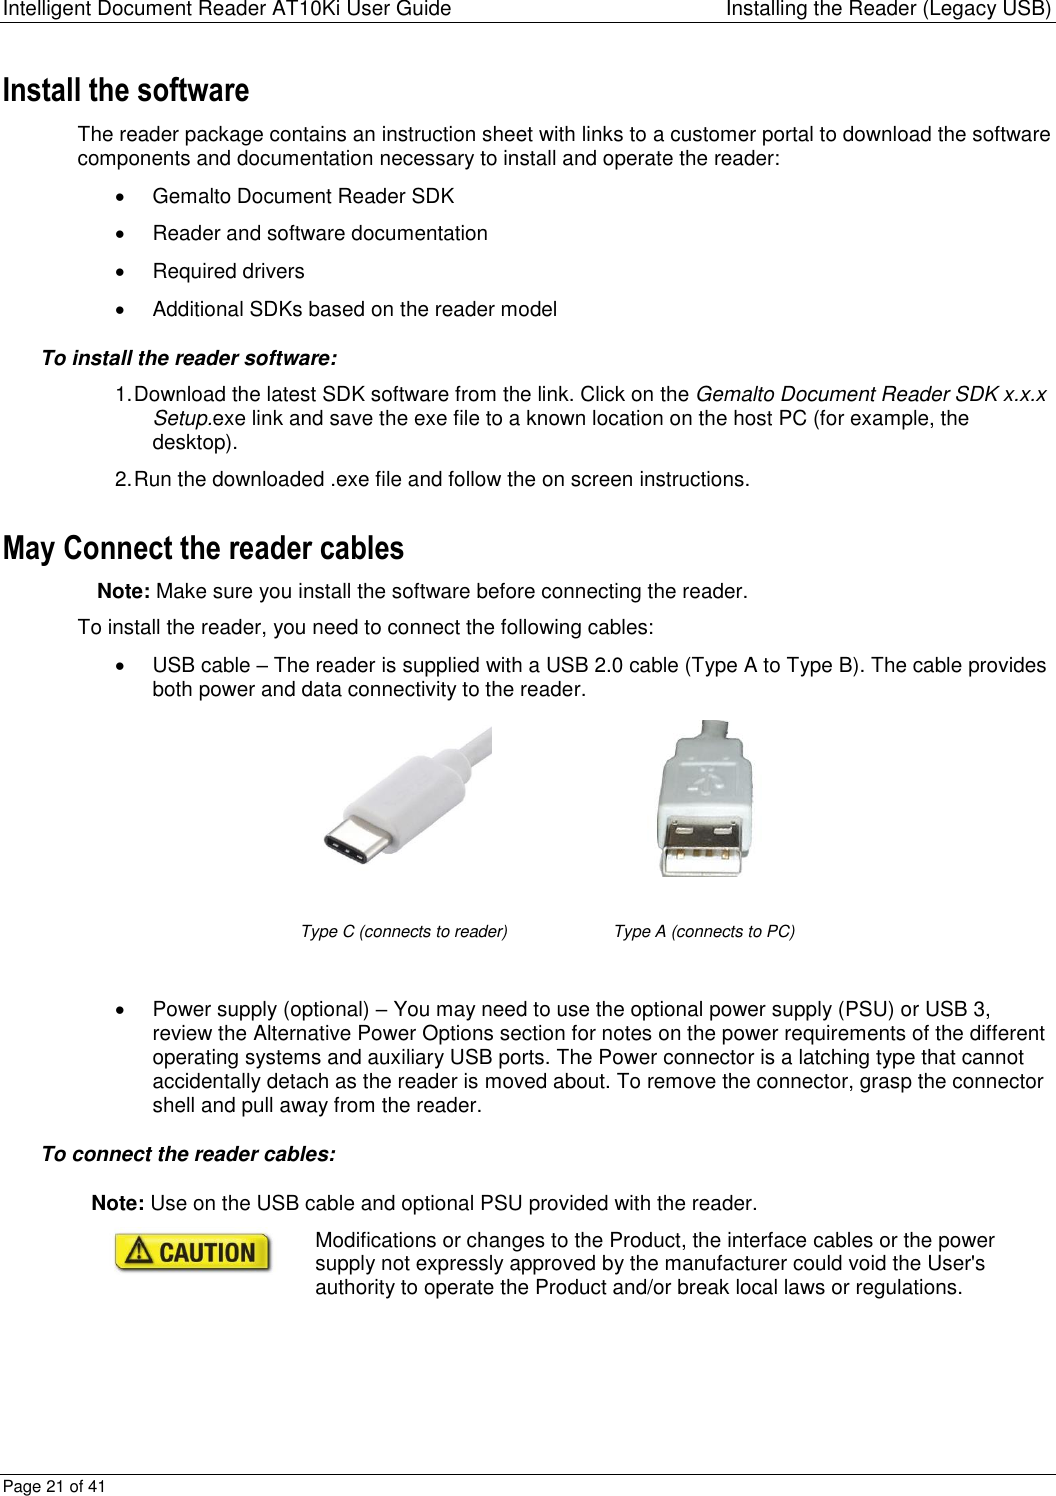 Page 21 of Gemalto PR01523 ation Scanner User Manual